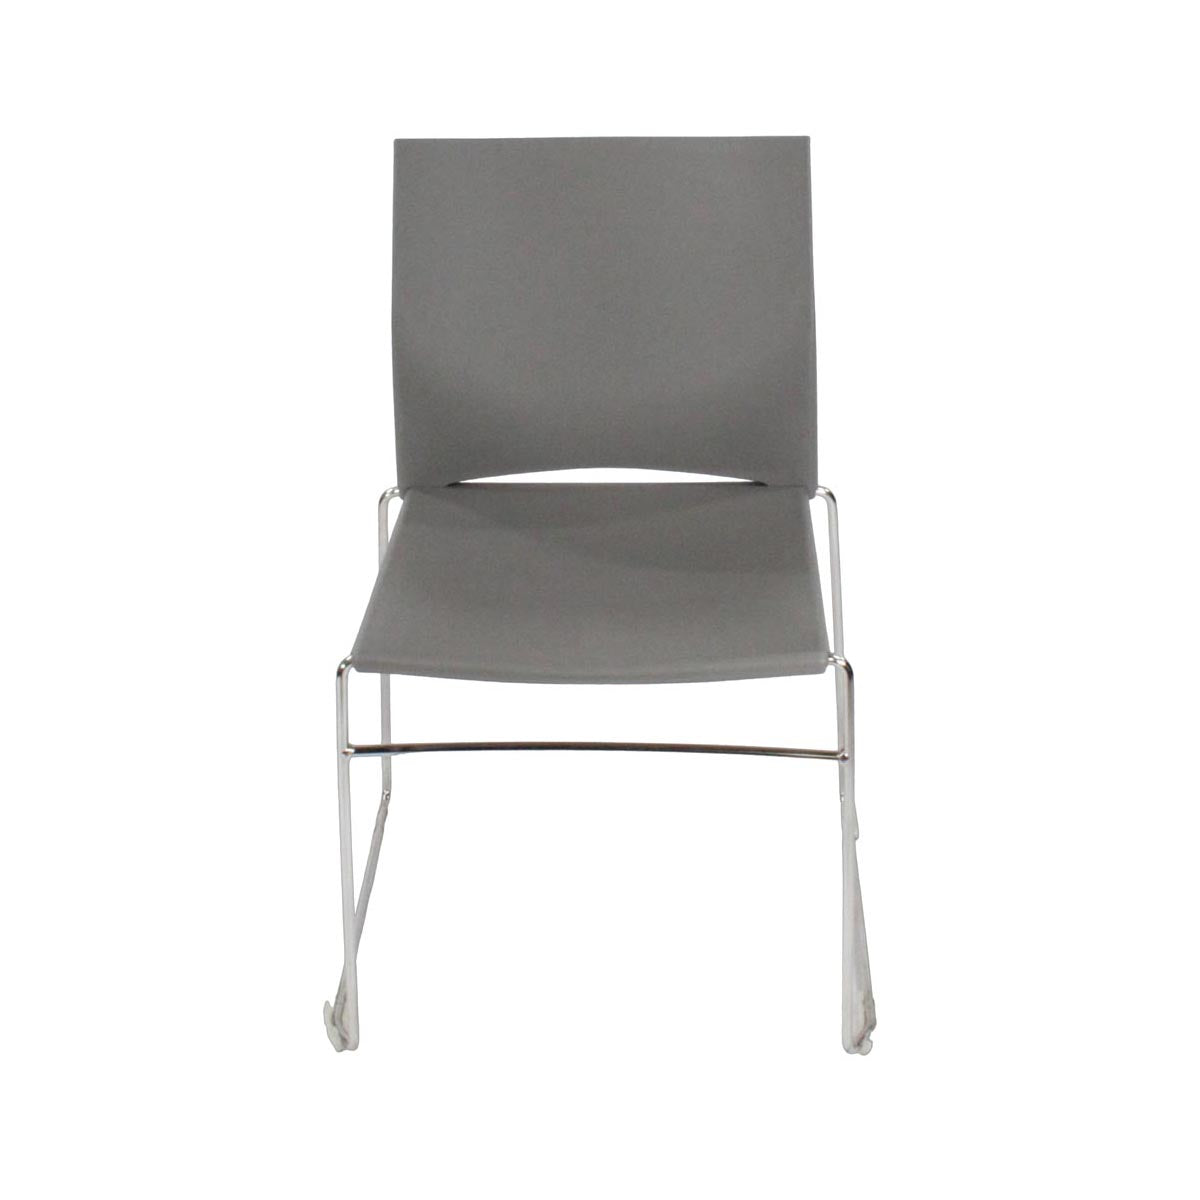 Herman Miller: Pronta Stacking Chair in Grey - Refurbished